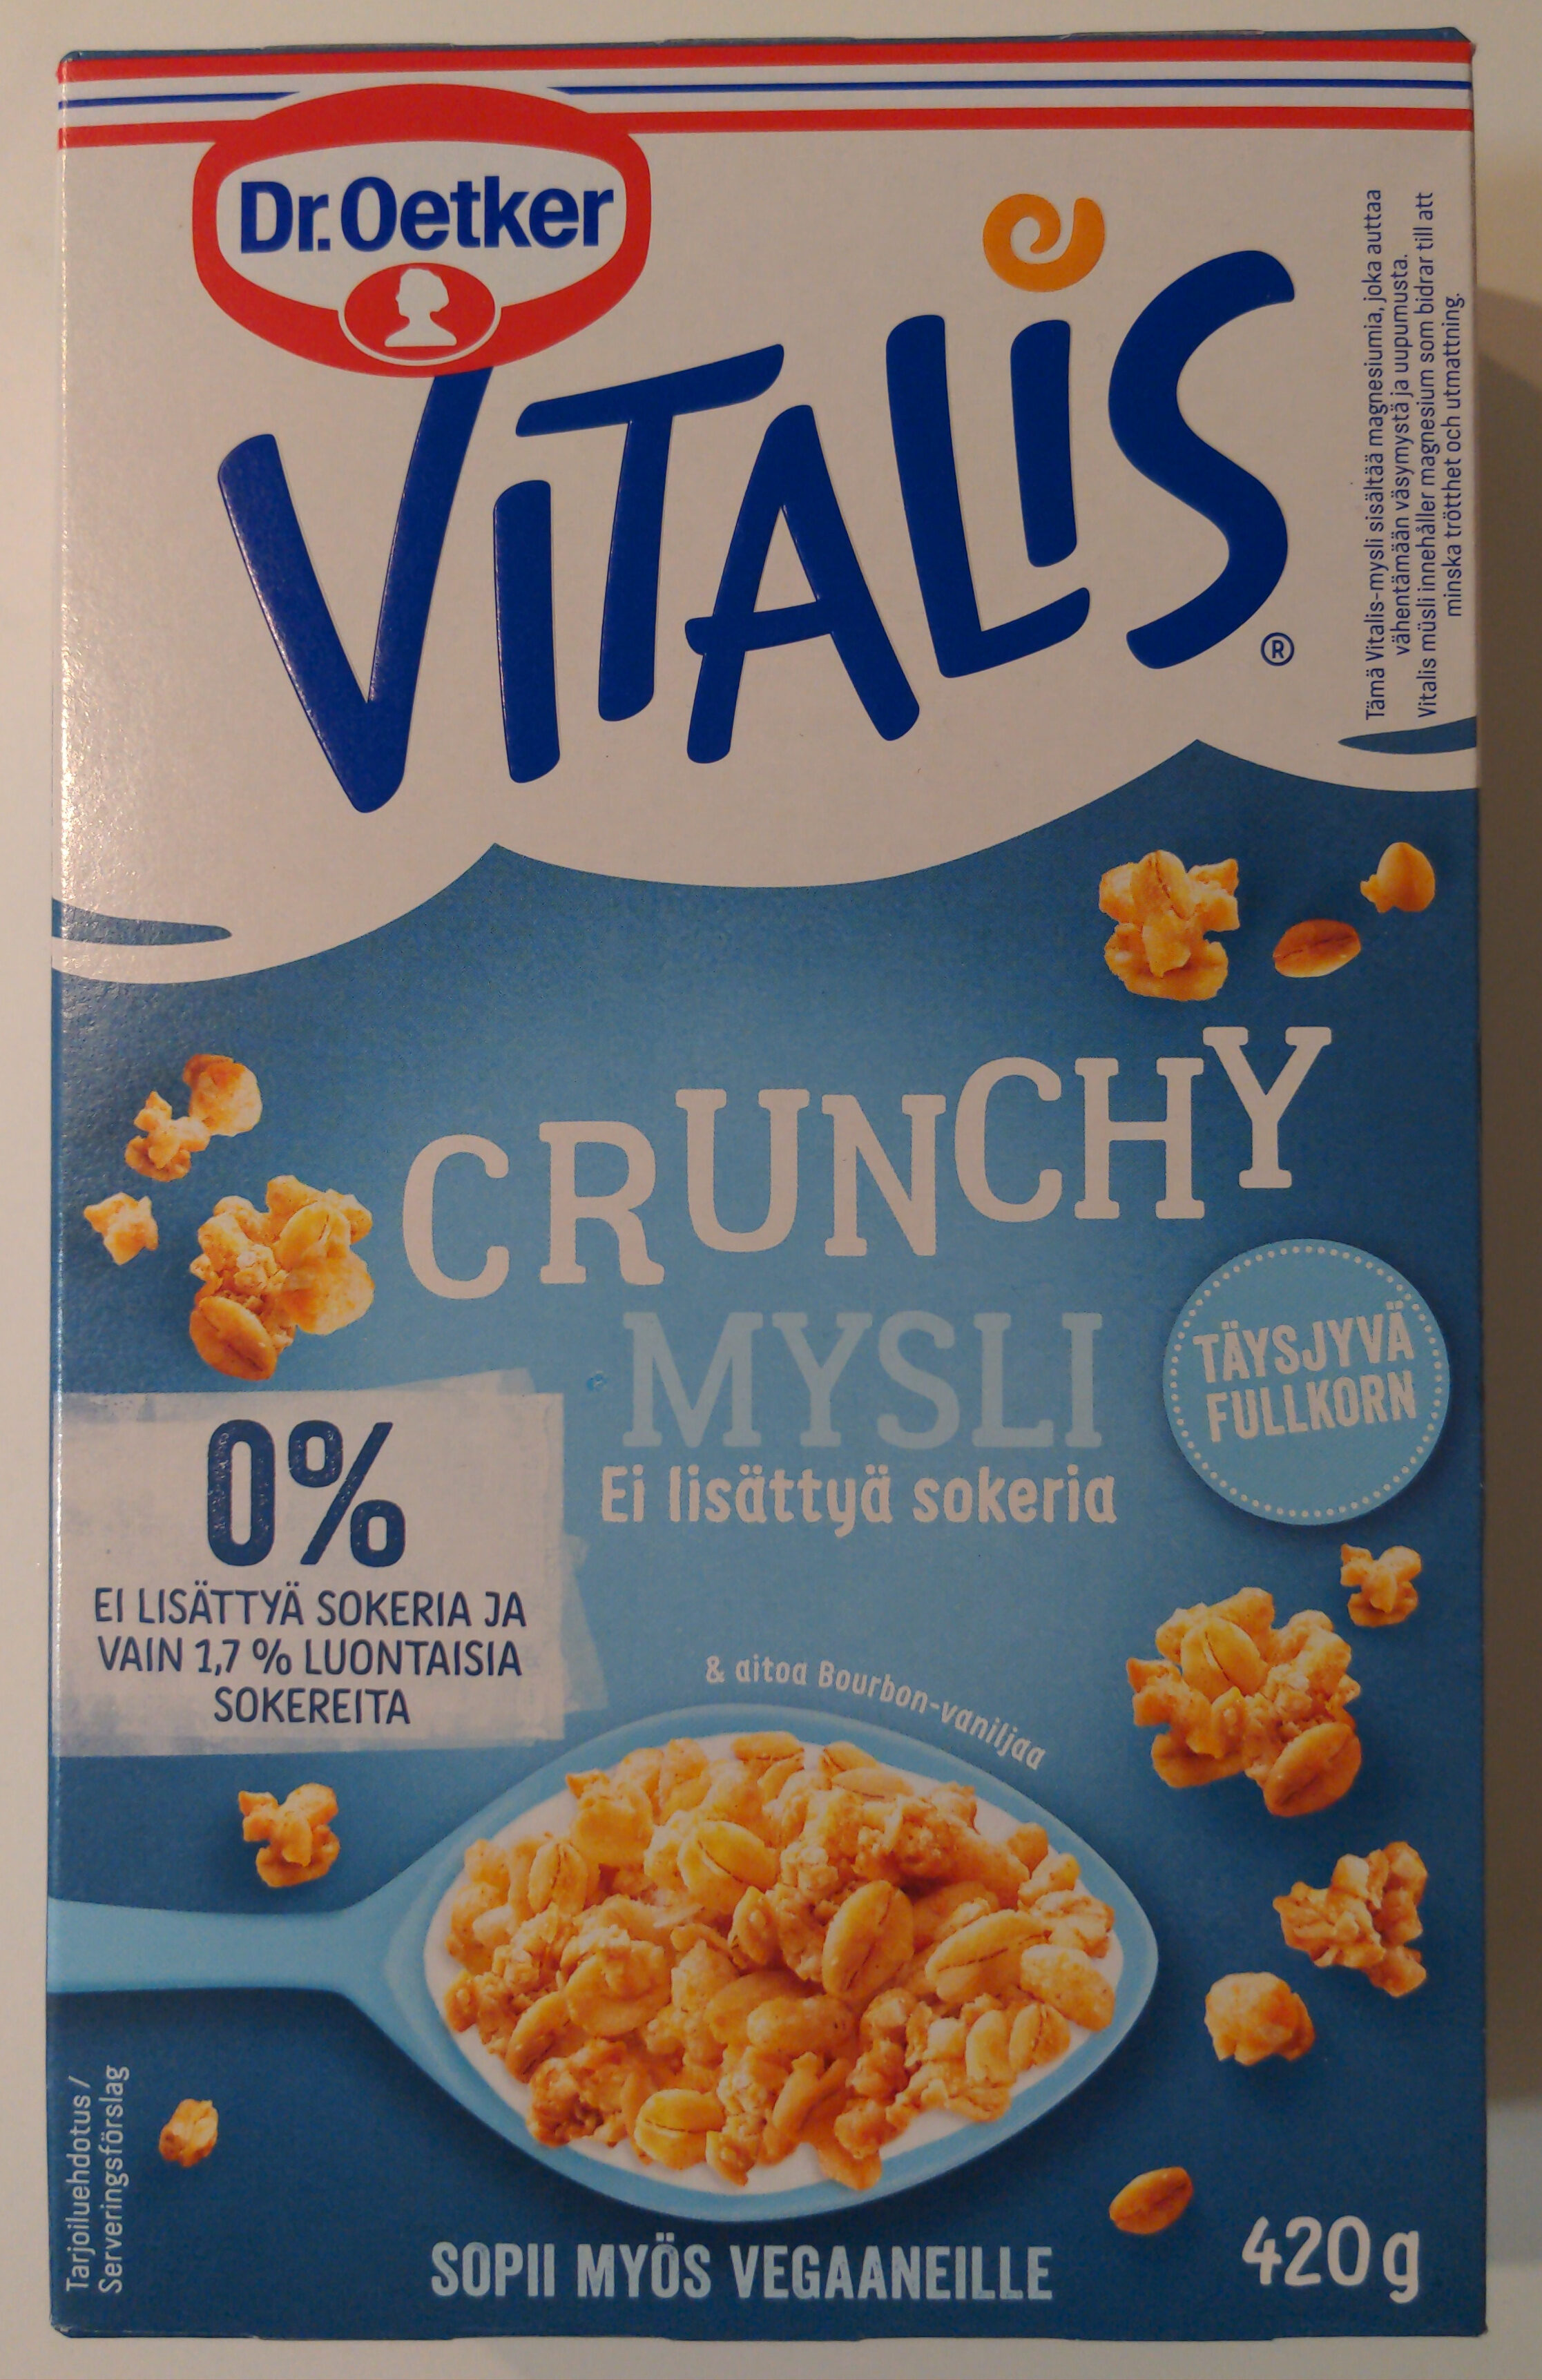 Vitalis crunchy mysli - Tuote